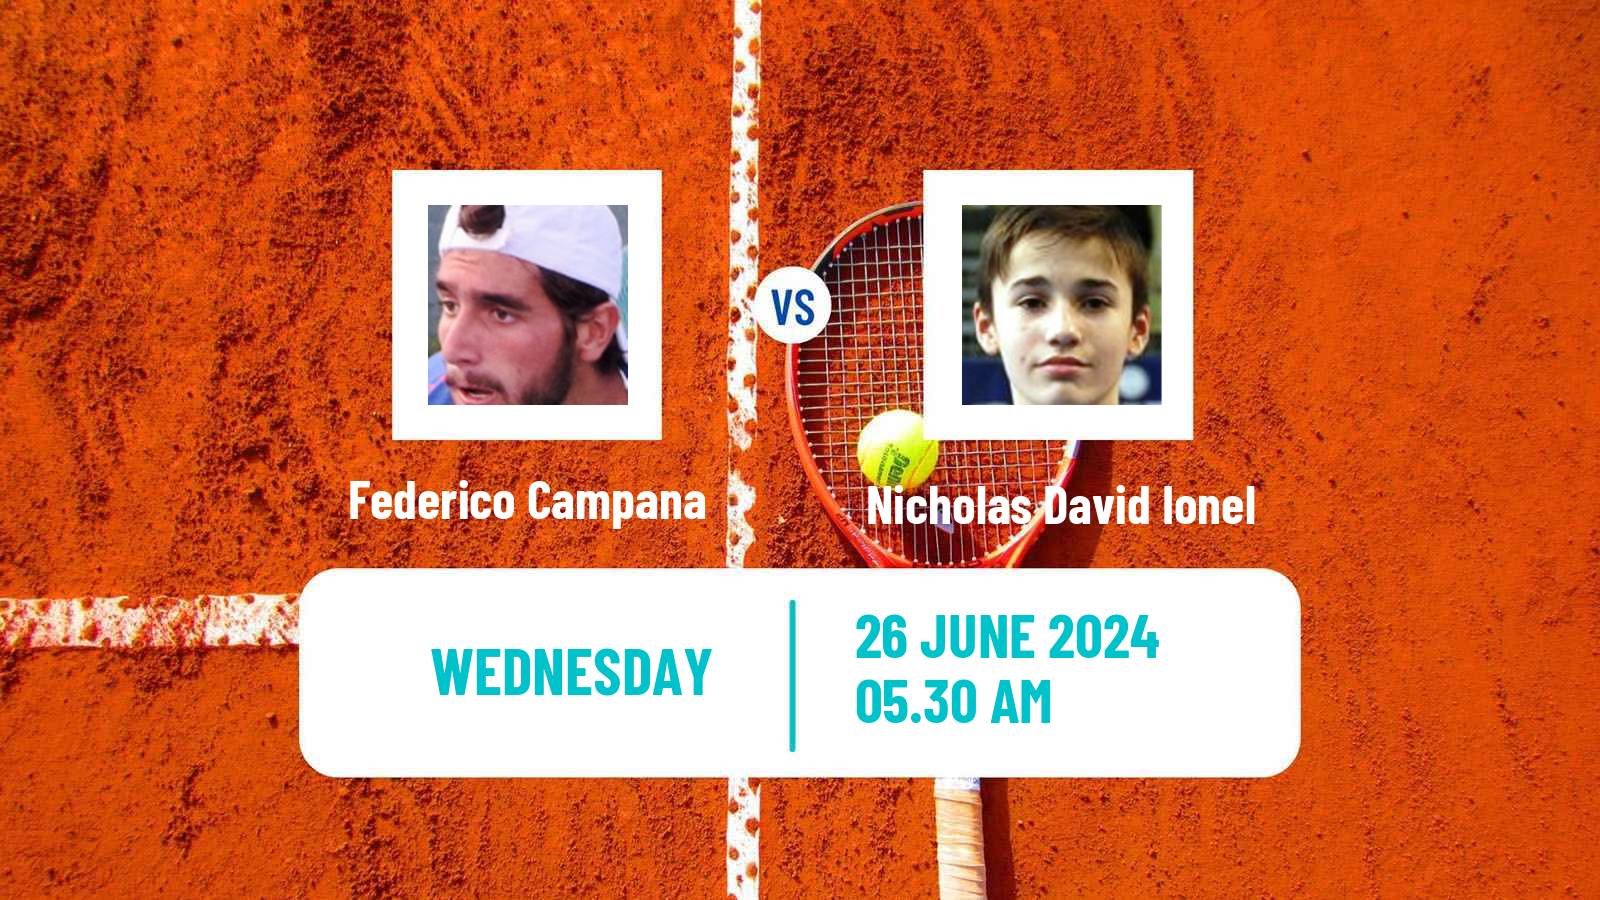 Tennis ITF M25 Satu Mare Men Federico Campana - Nicholas David Ionel